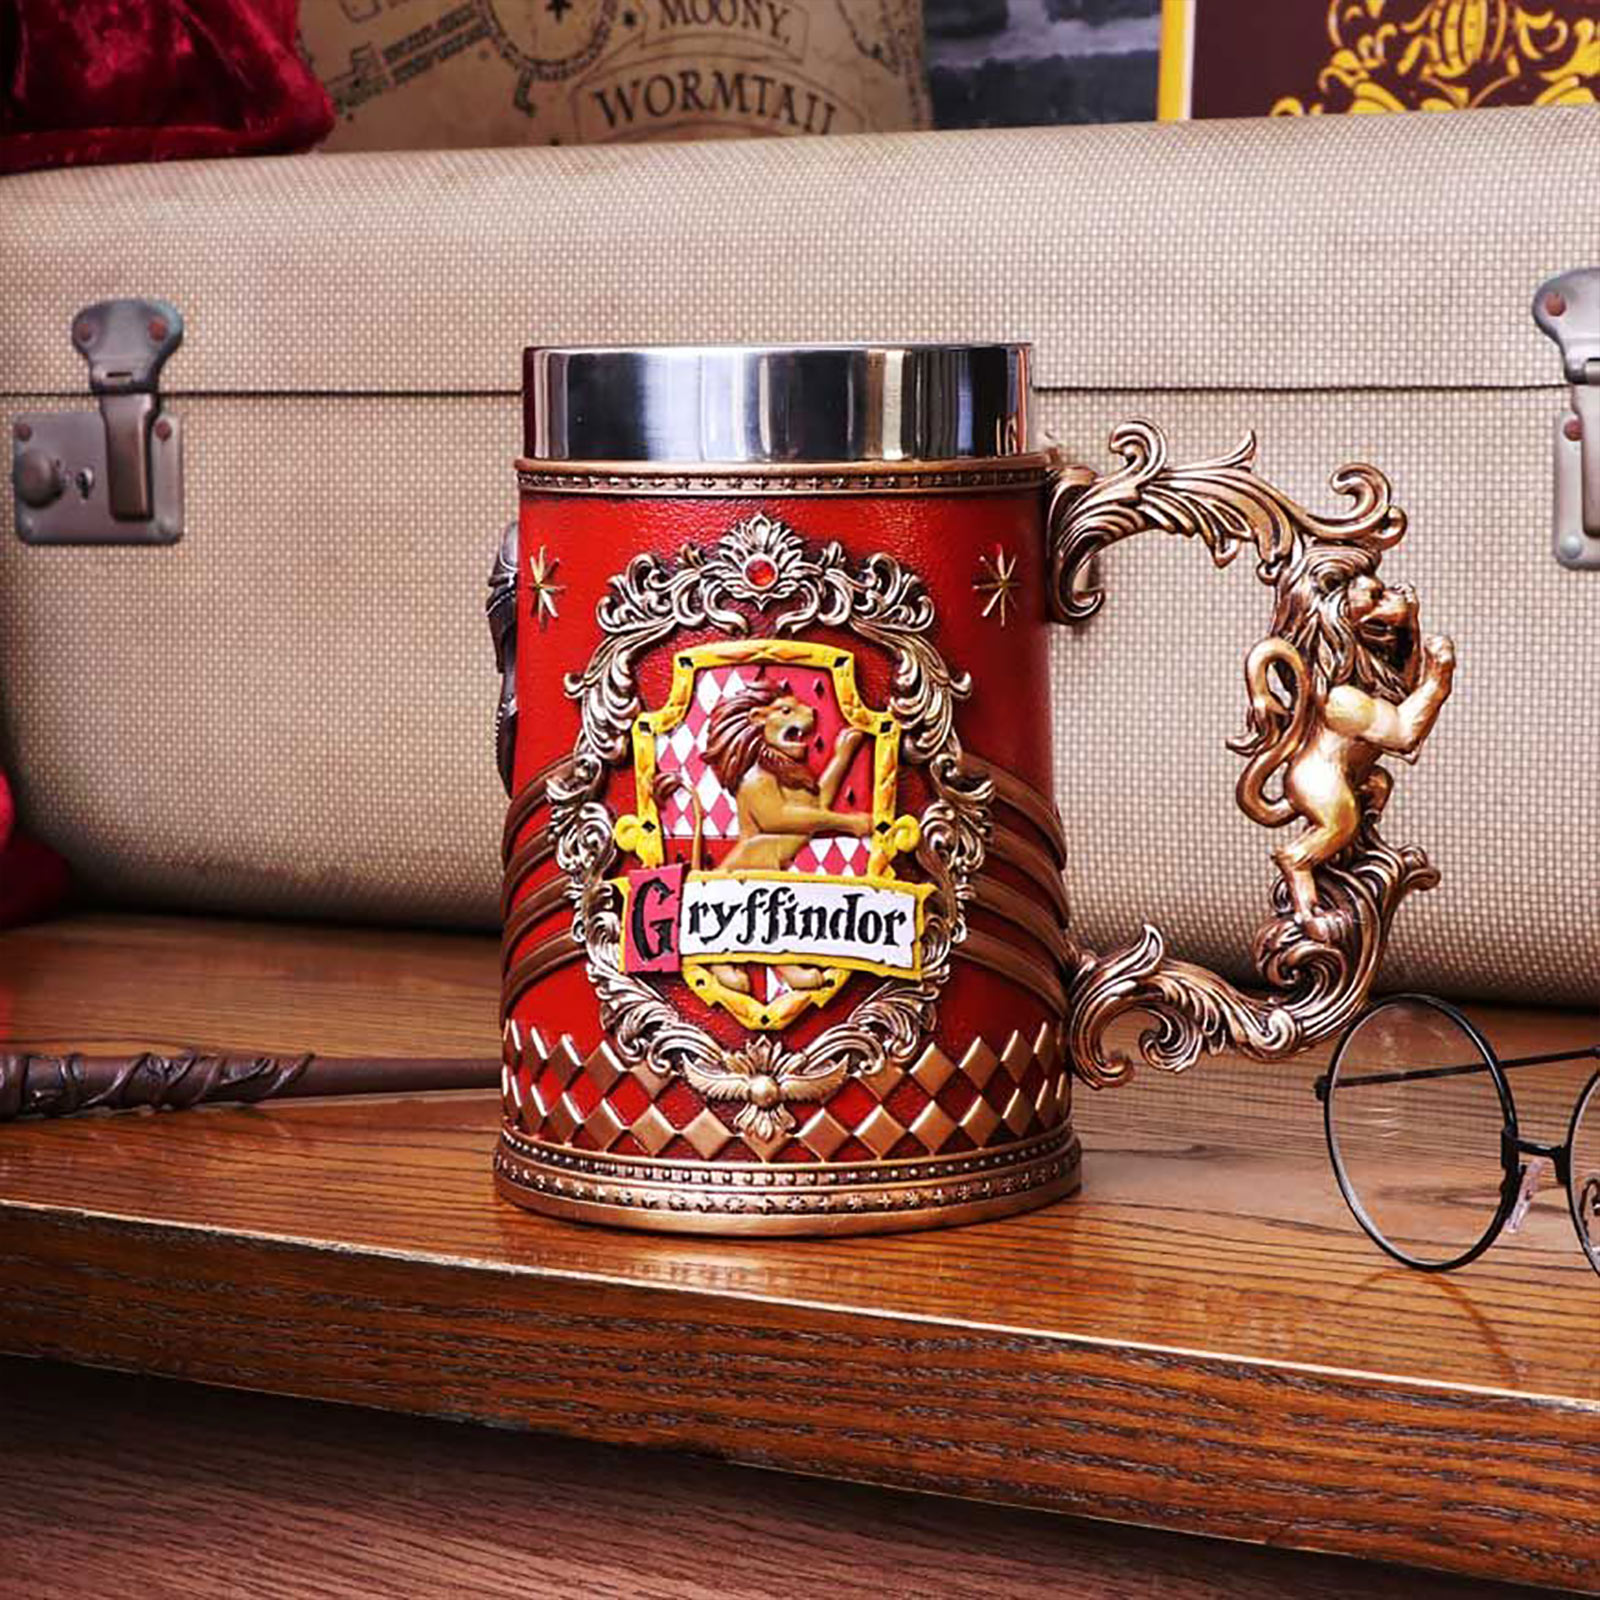 Harry Potter - Mug de luxe avec le logo de Gryffindor